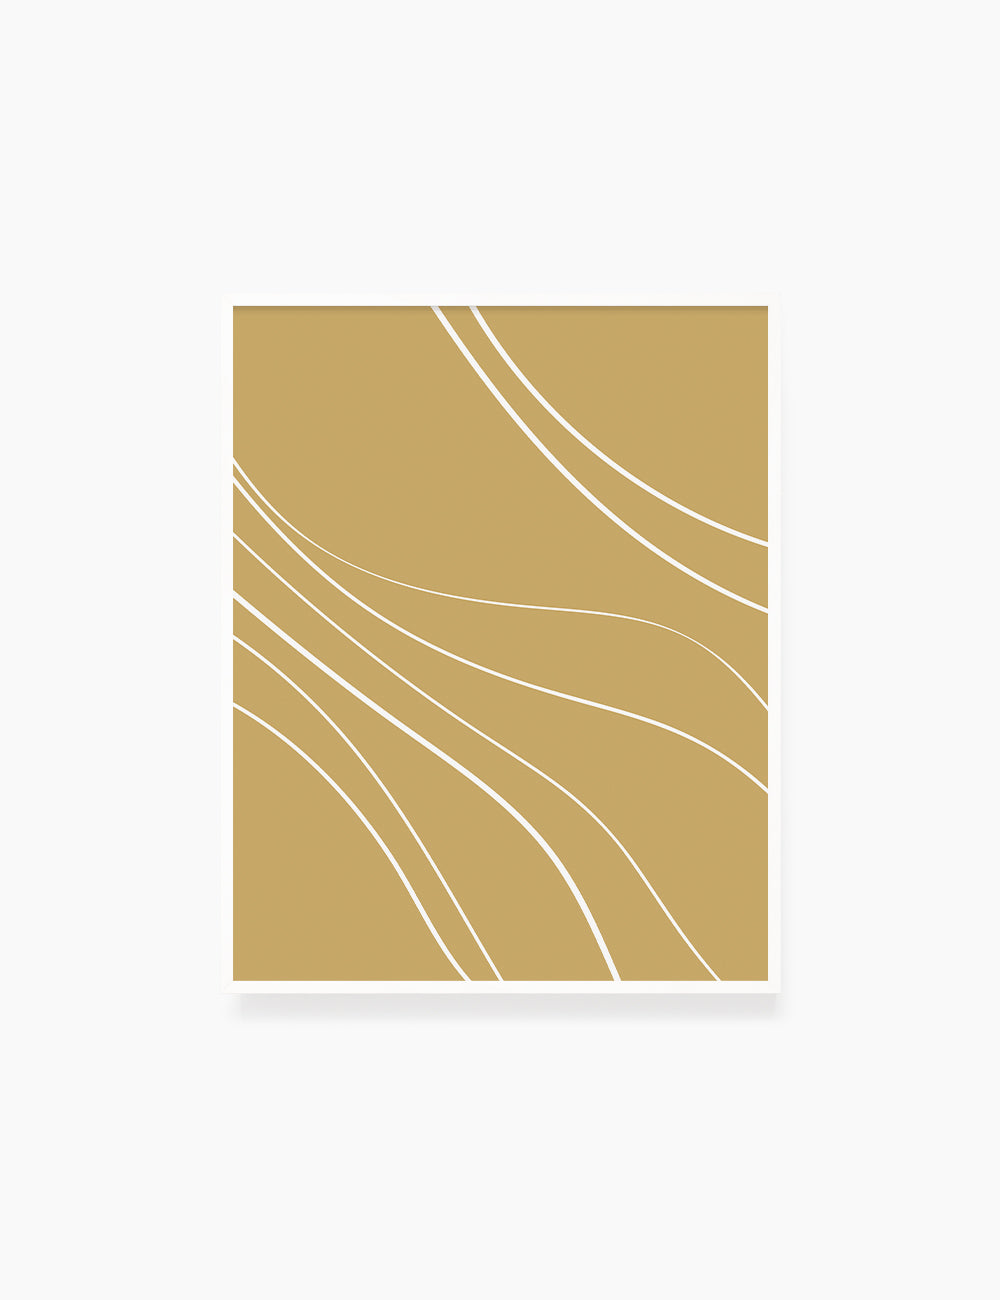 MINIMAL LINE ART. Abstract Waves. Boho. Yellow Gold. Printable Wall Art Illustration. - PAPER MOON Art & Design